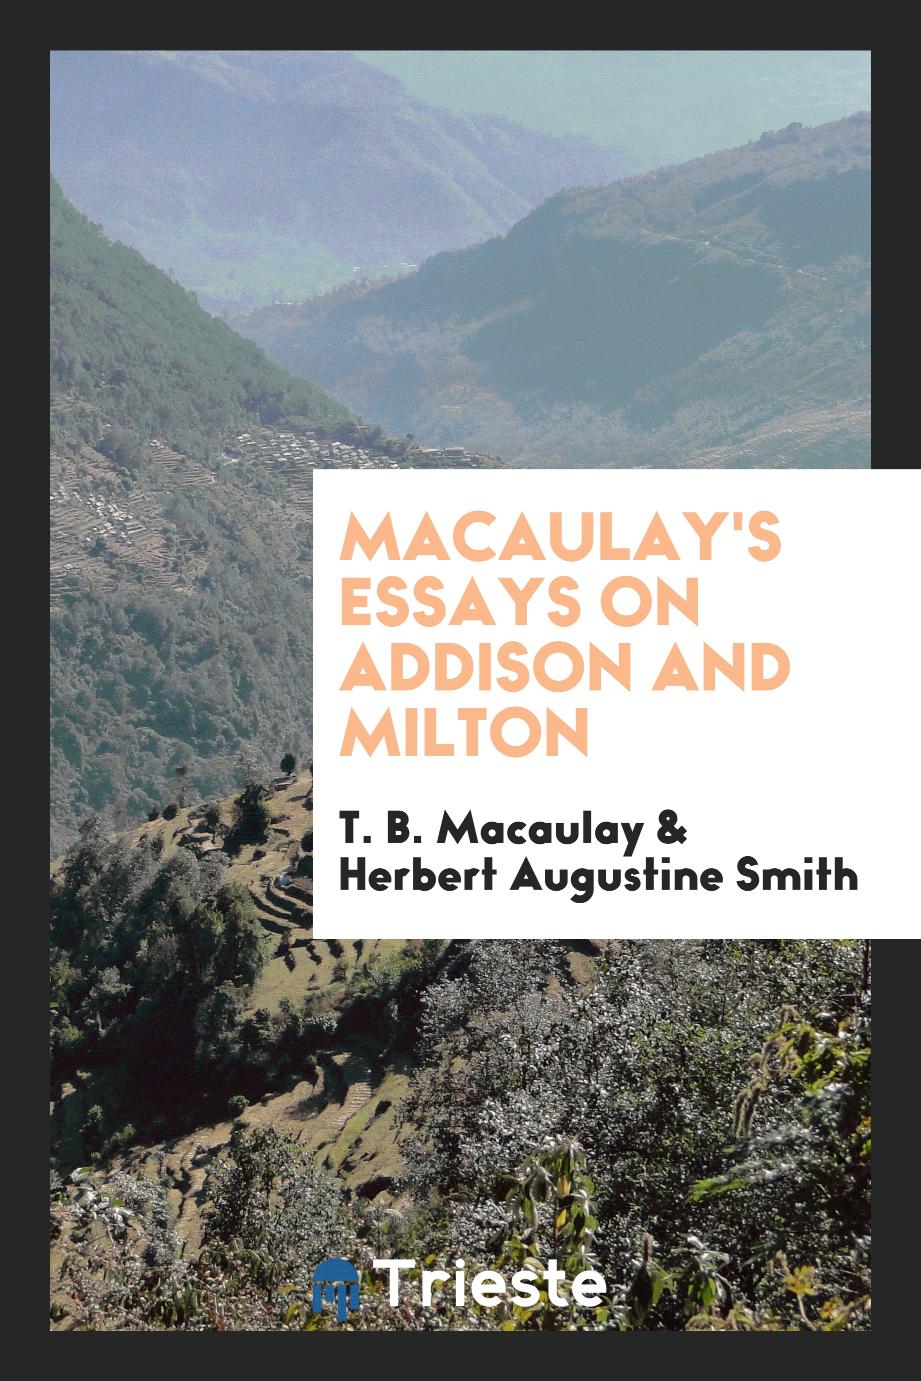 T. B. Macaulay, Herbert Augustine Smith - Macaulay's Essays on Addison and Milton